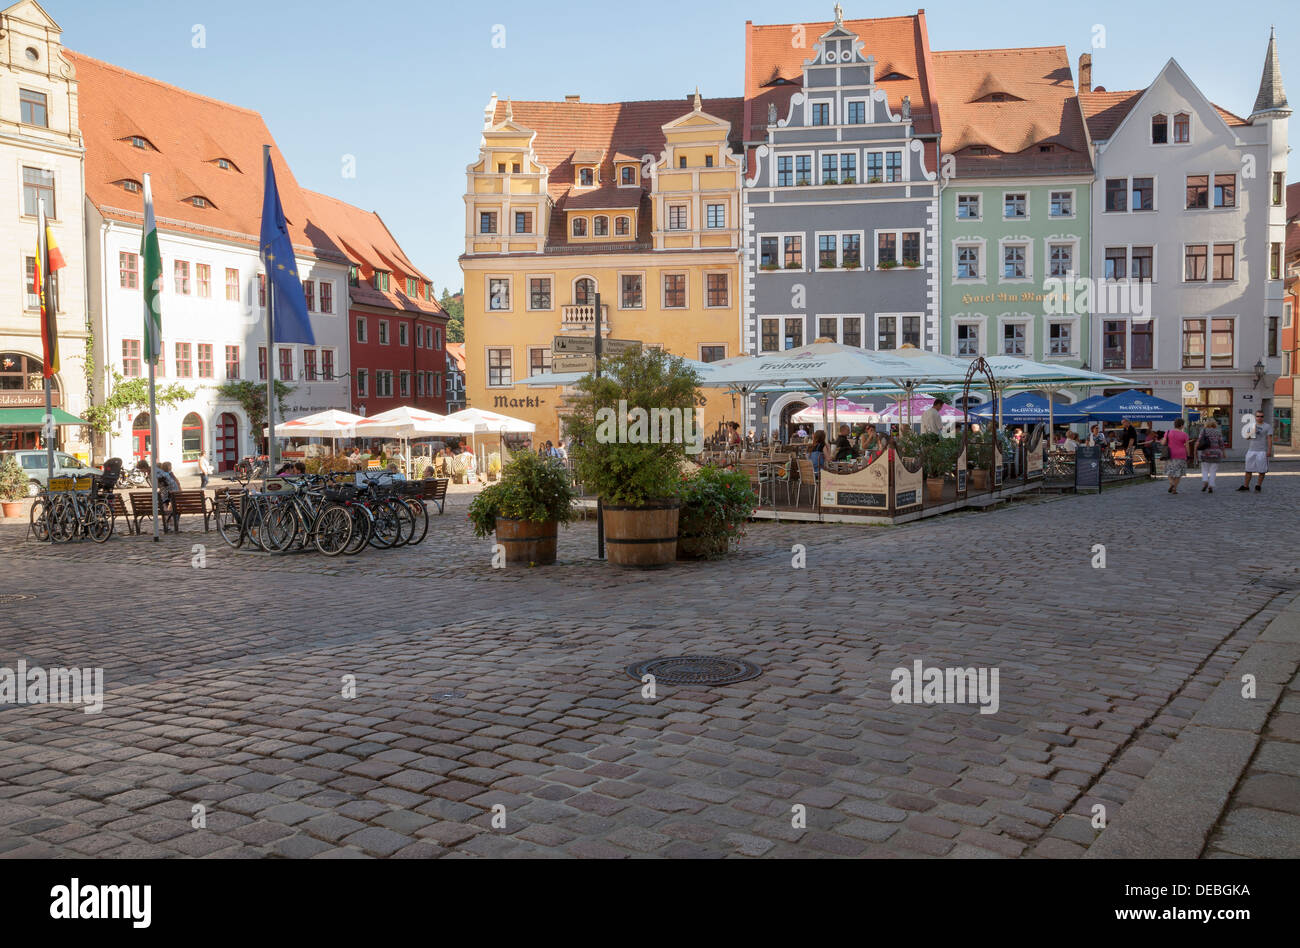 Markt, Altstadt, Meissen, Sachsen, Deutschland Stockfoto